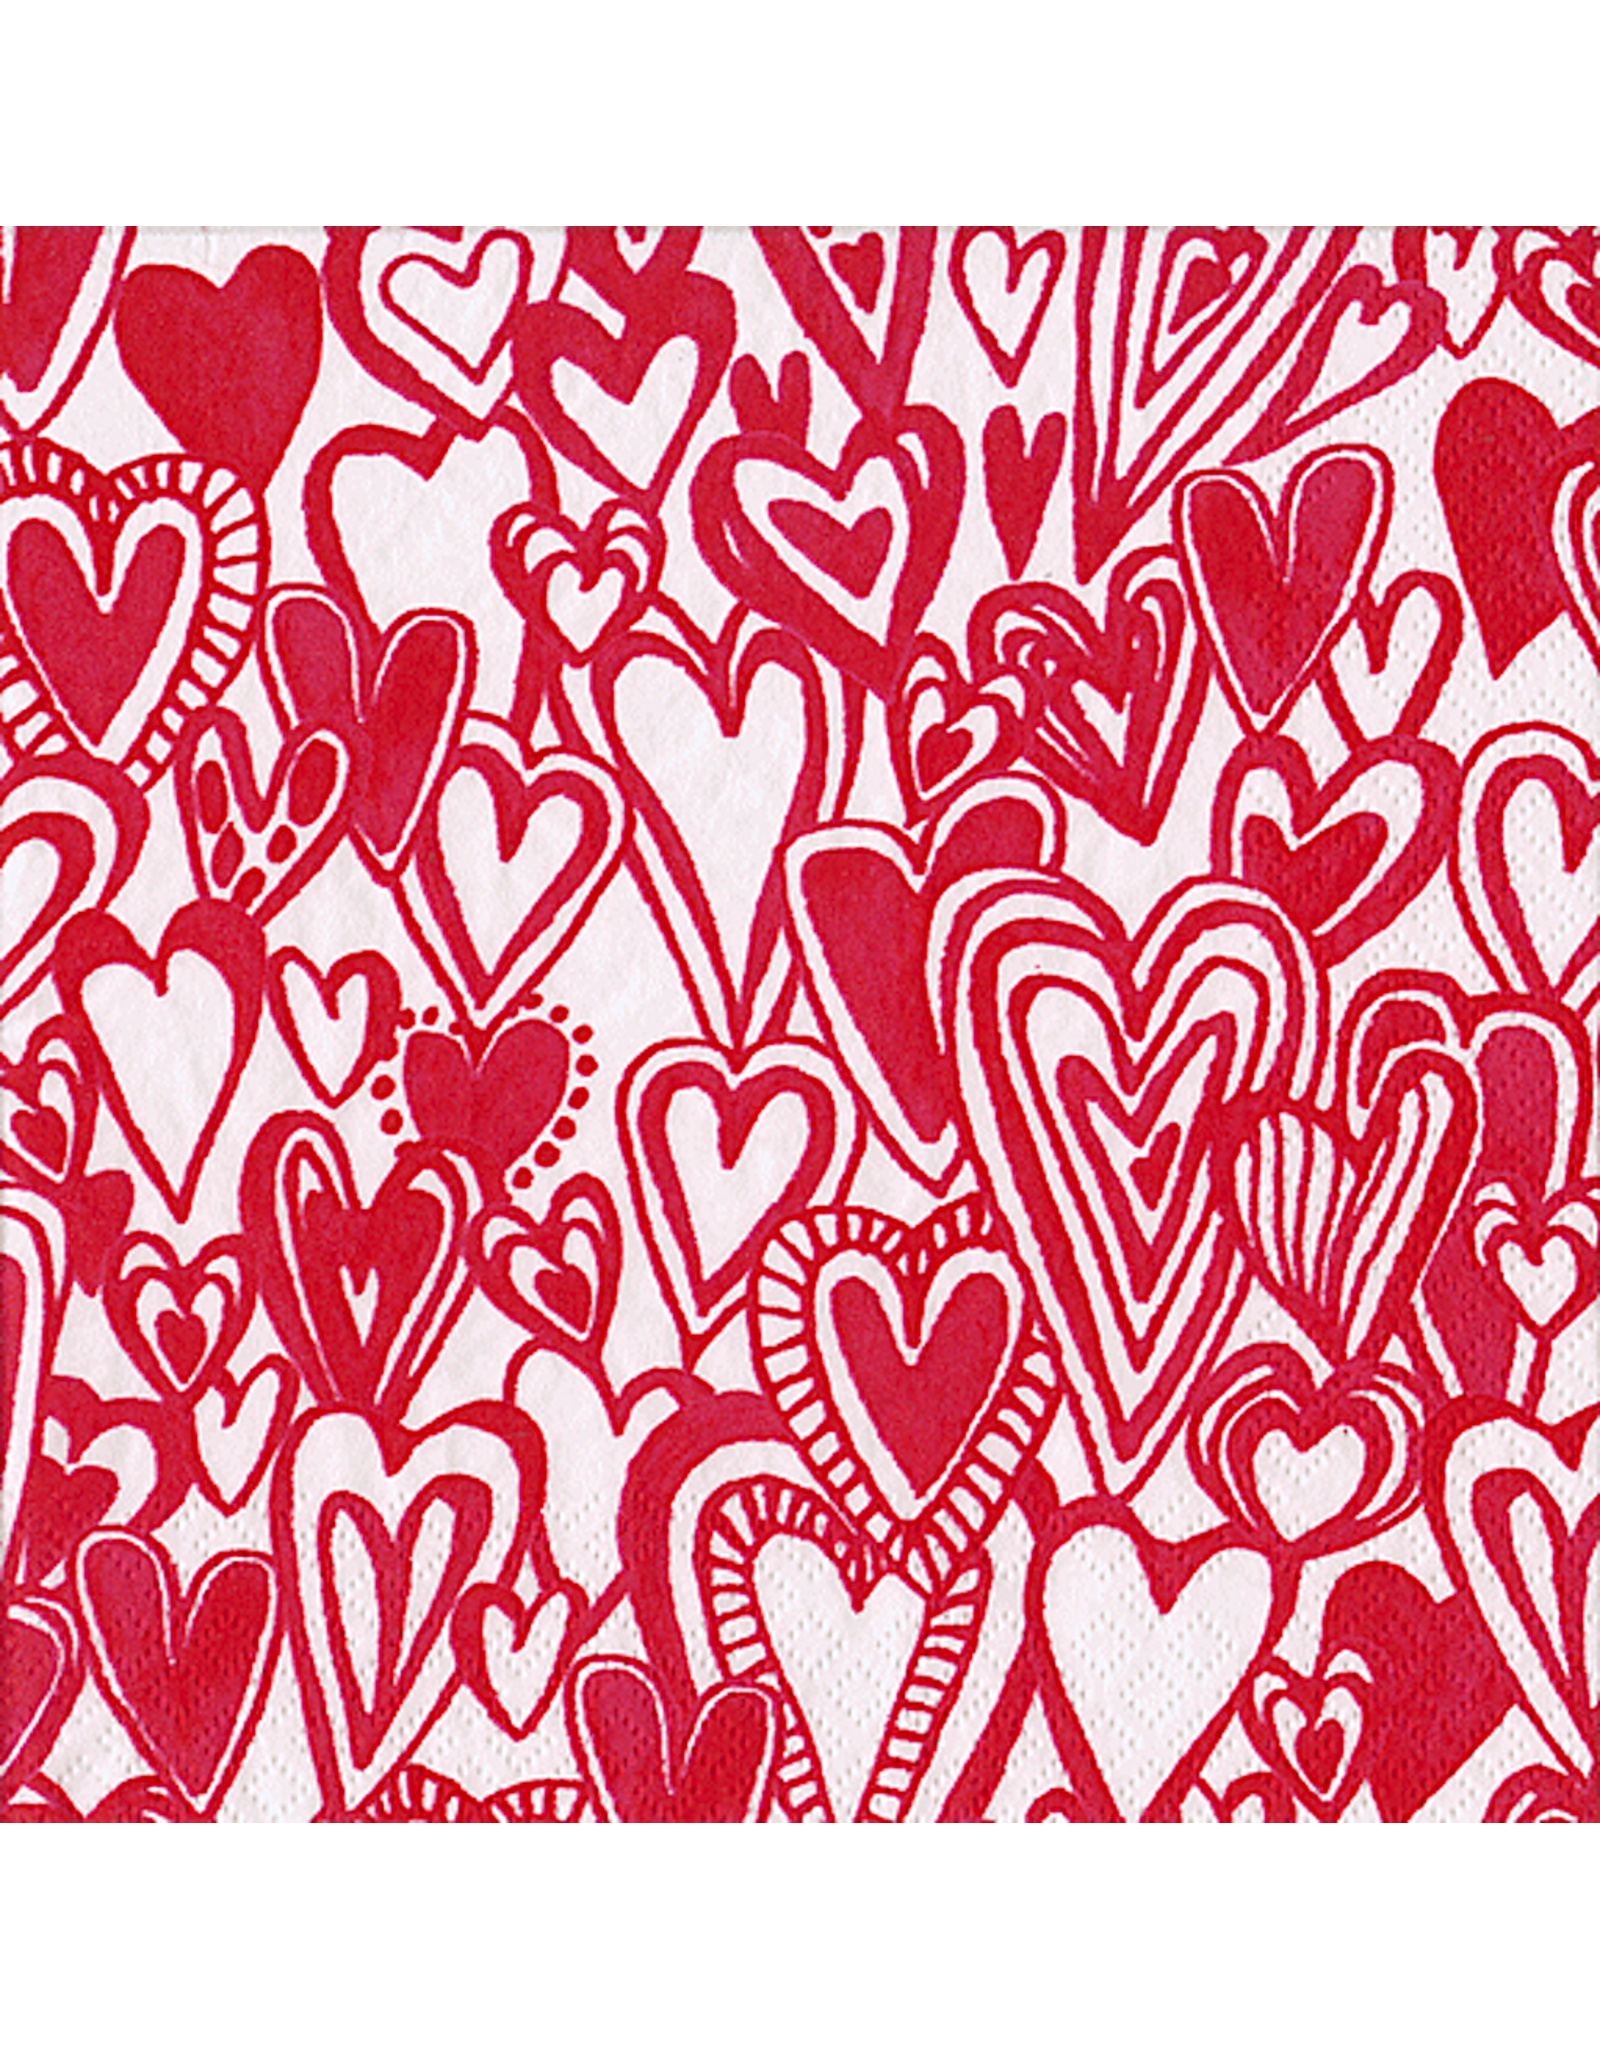 Caspari Valentines Love Paper Cocktail Napkins 20pk Groovy Love